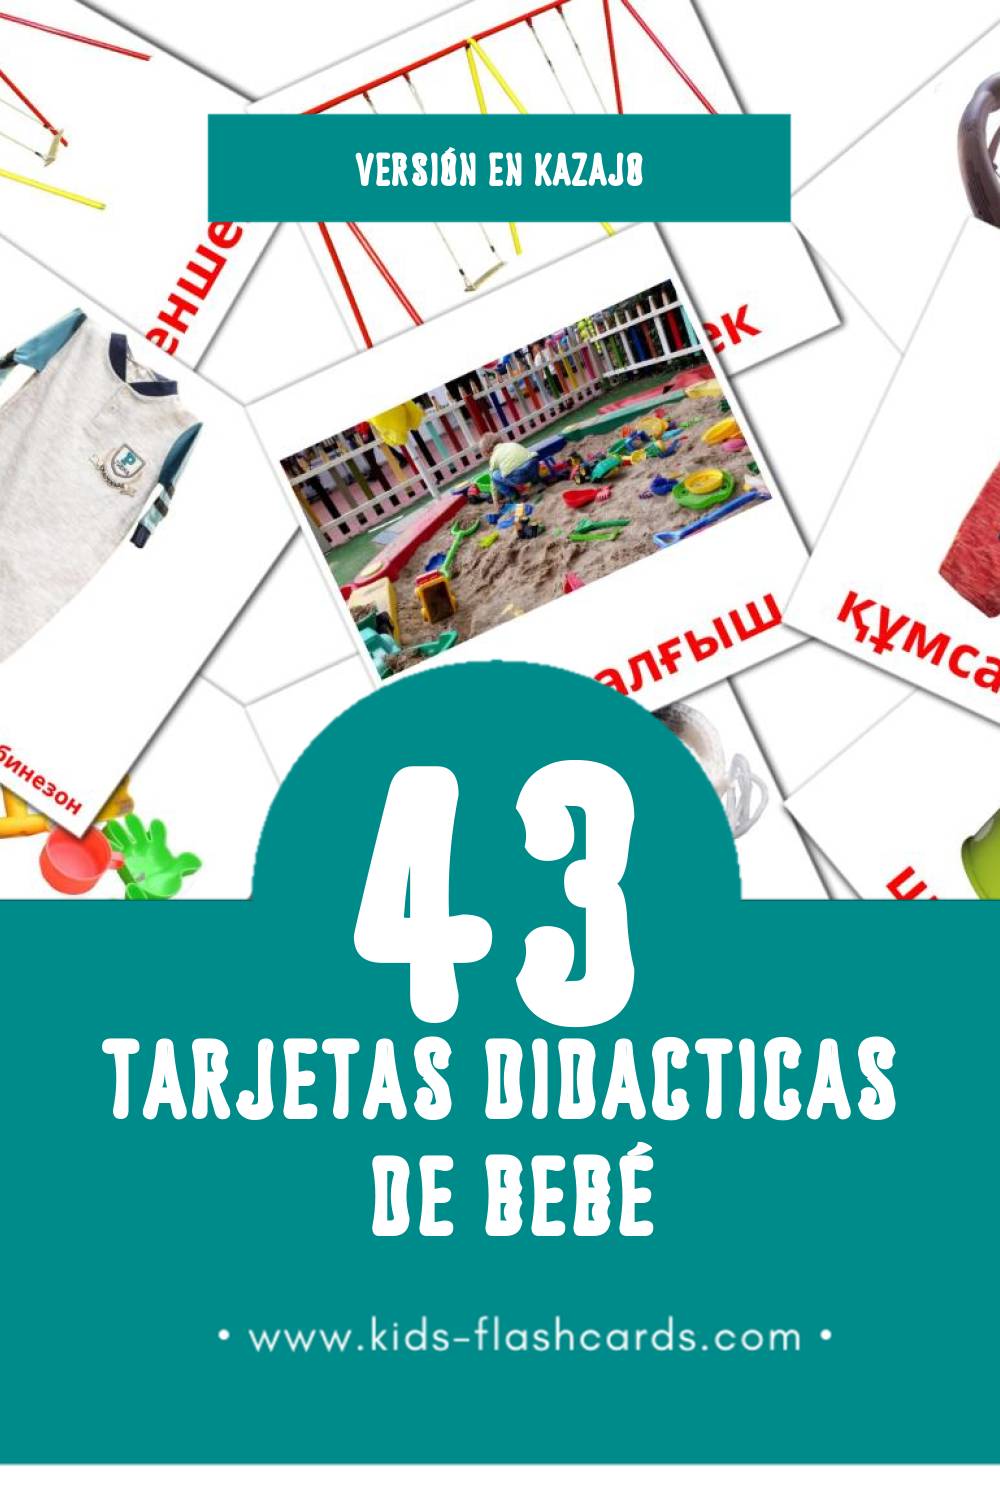 Tarjetas visuales de Бала para niños pequeños (43 tarjetas en Kazajo)